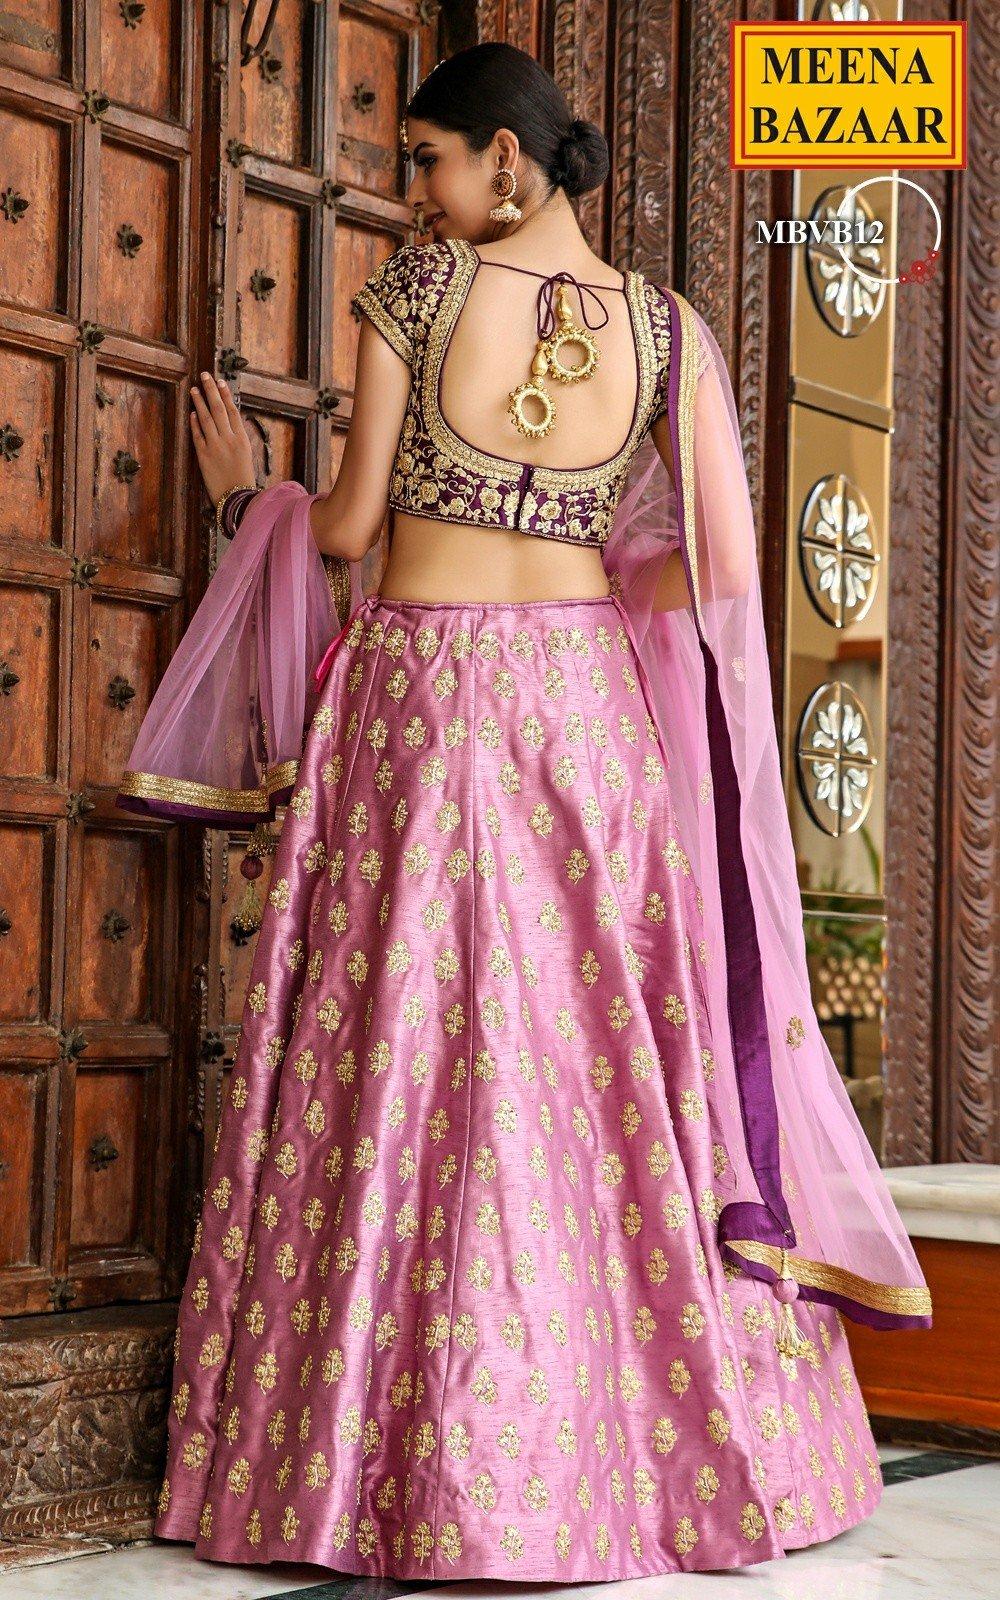 Meena Bazaar | Sarees | Indian fashion, Designer sarees online shopping,  Saree designs